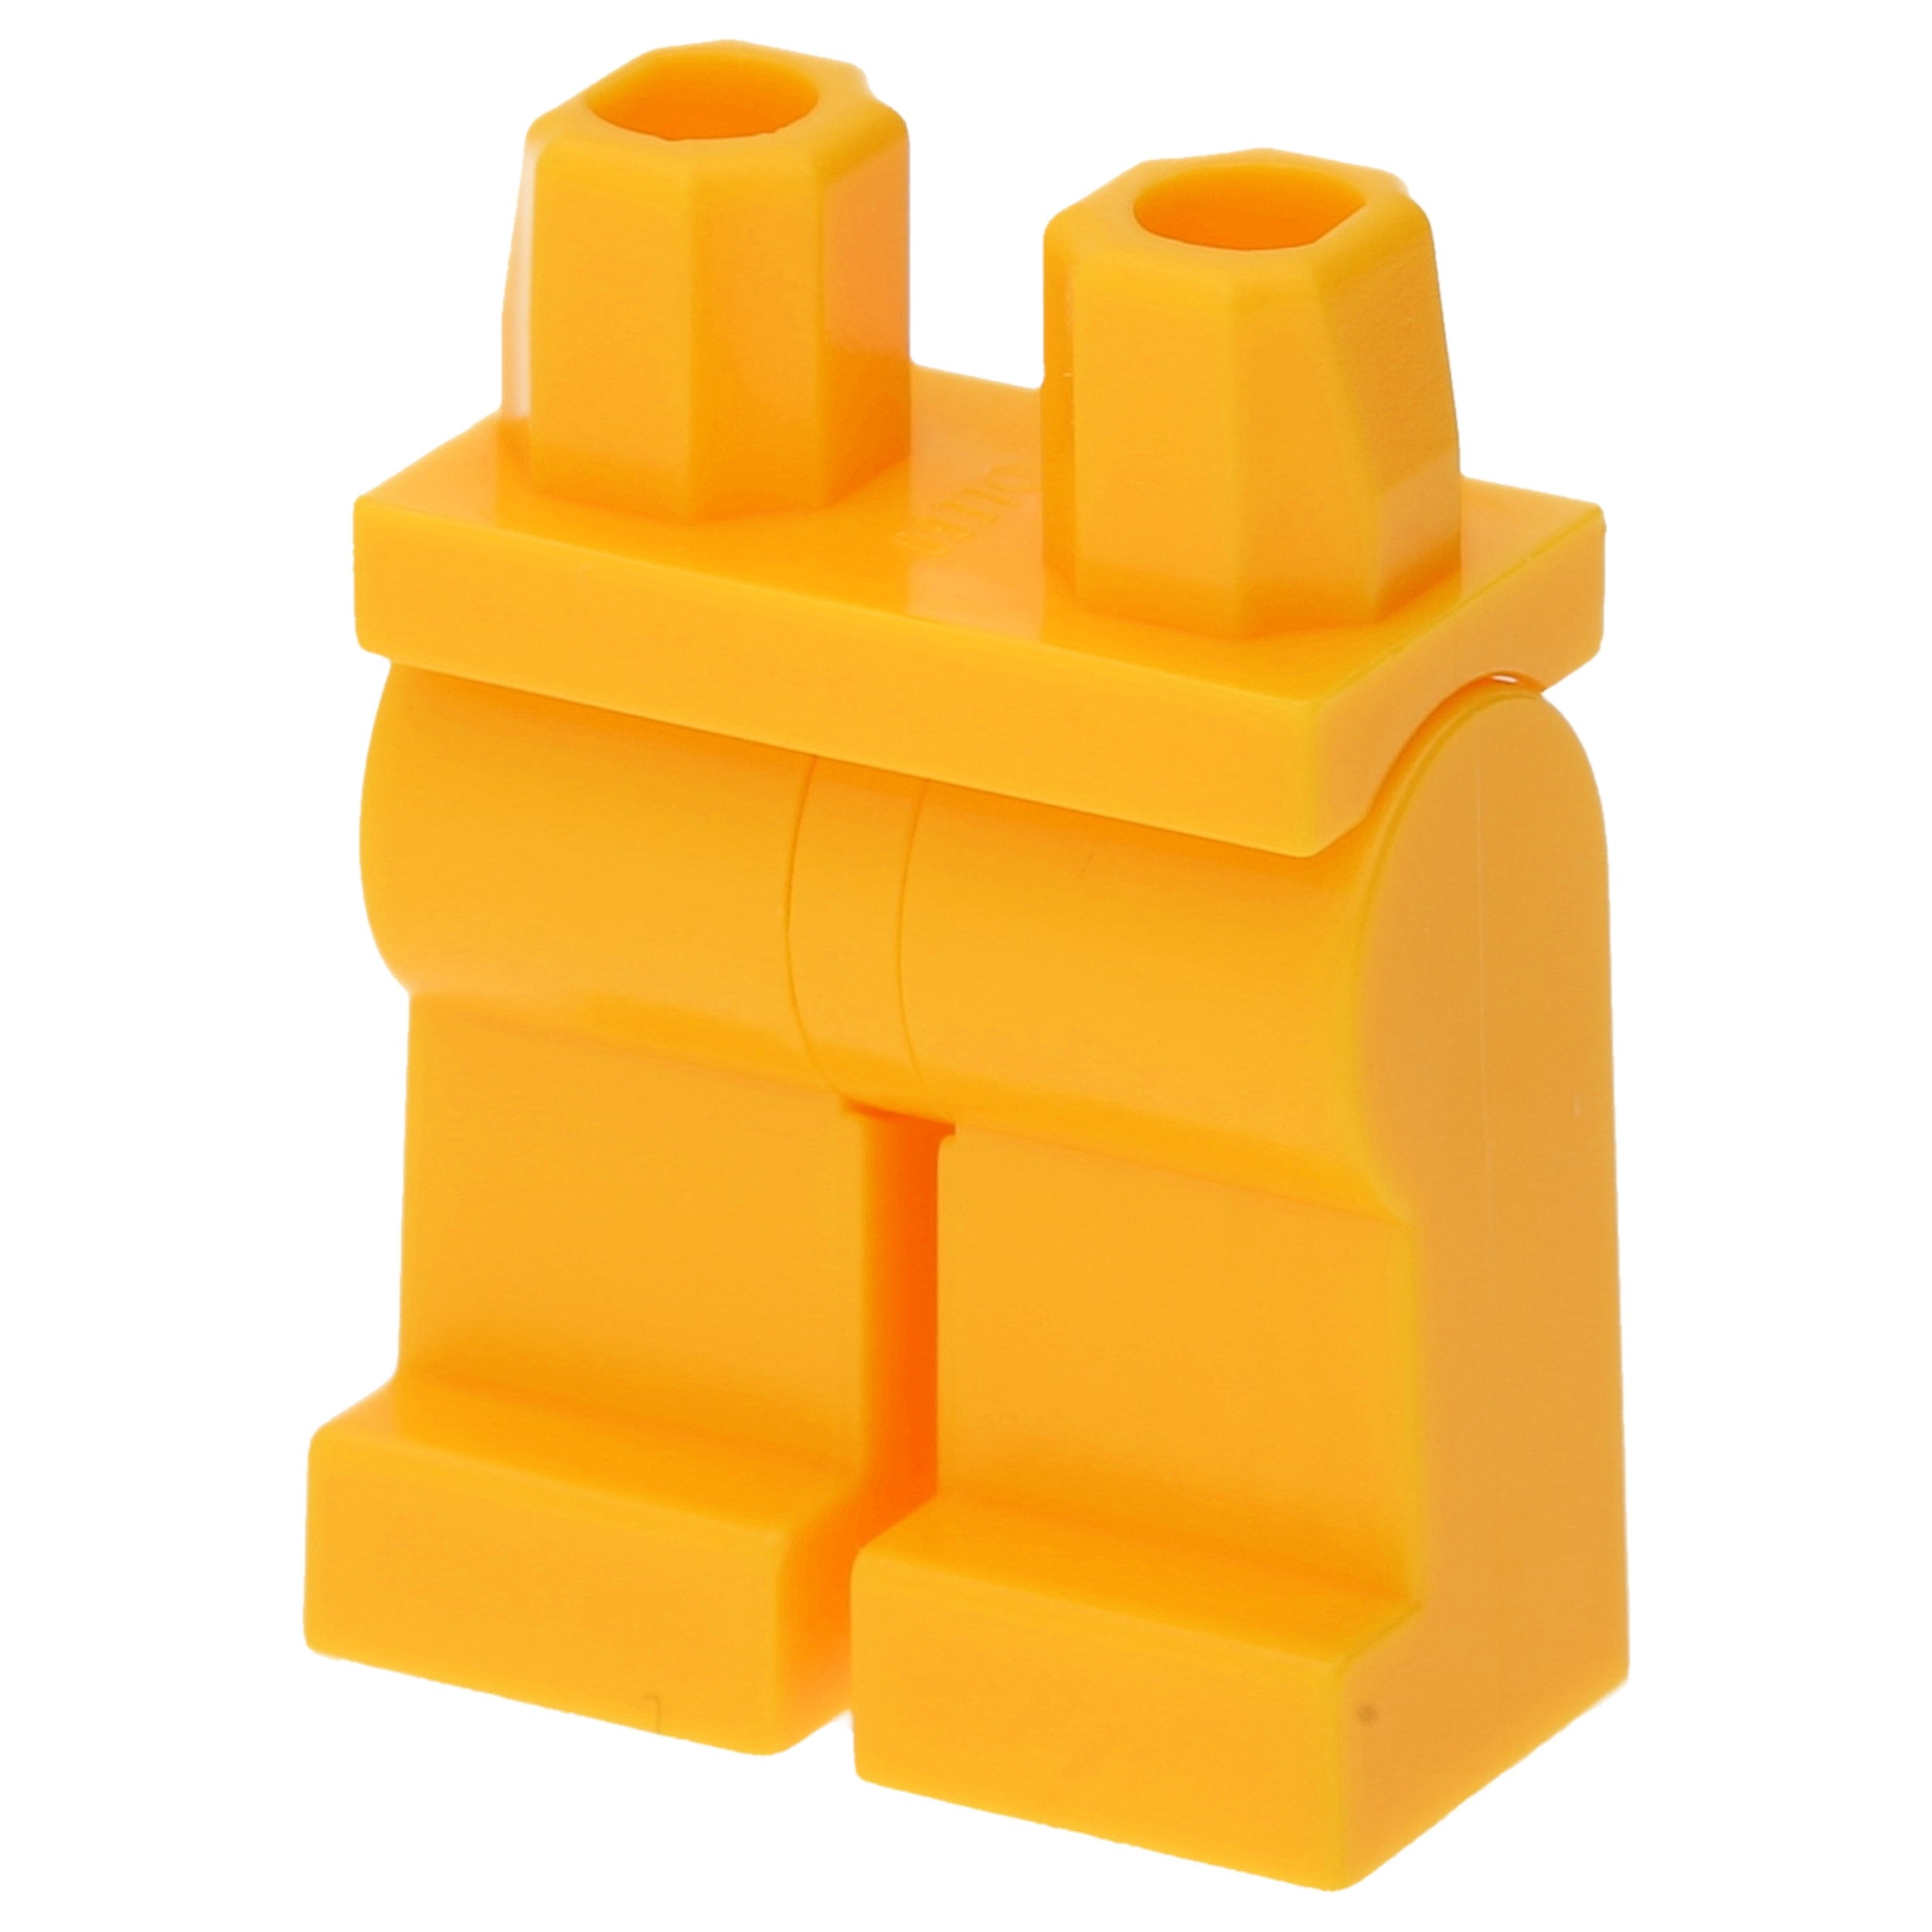 LEGO Minifigures Legs & Skirts - Legs plane